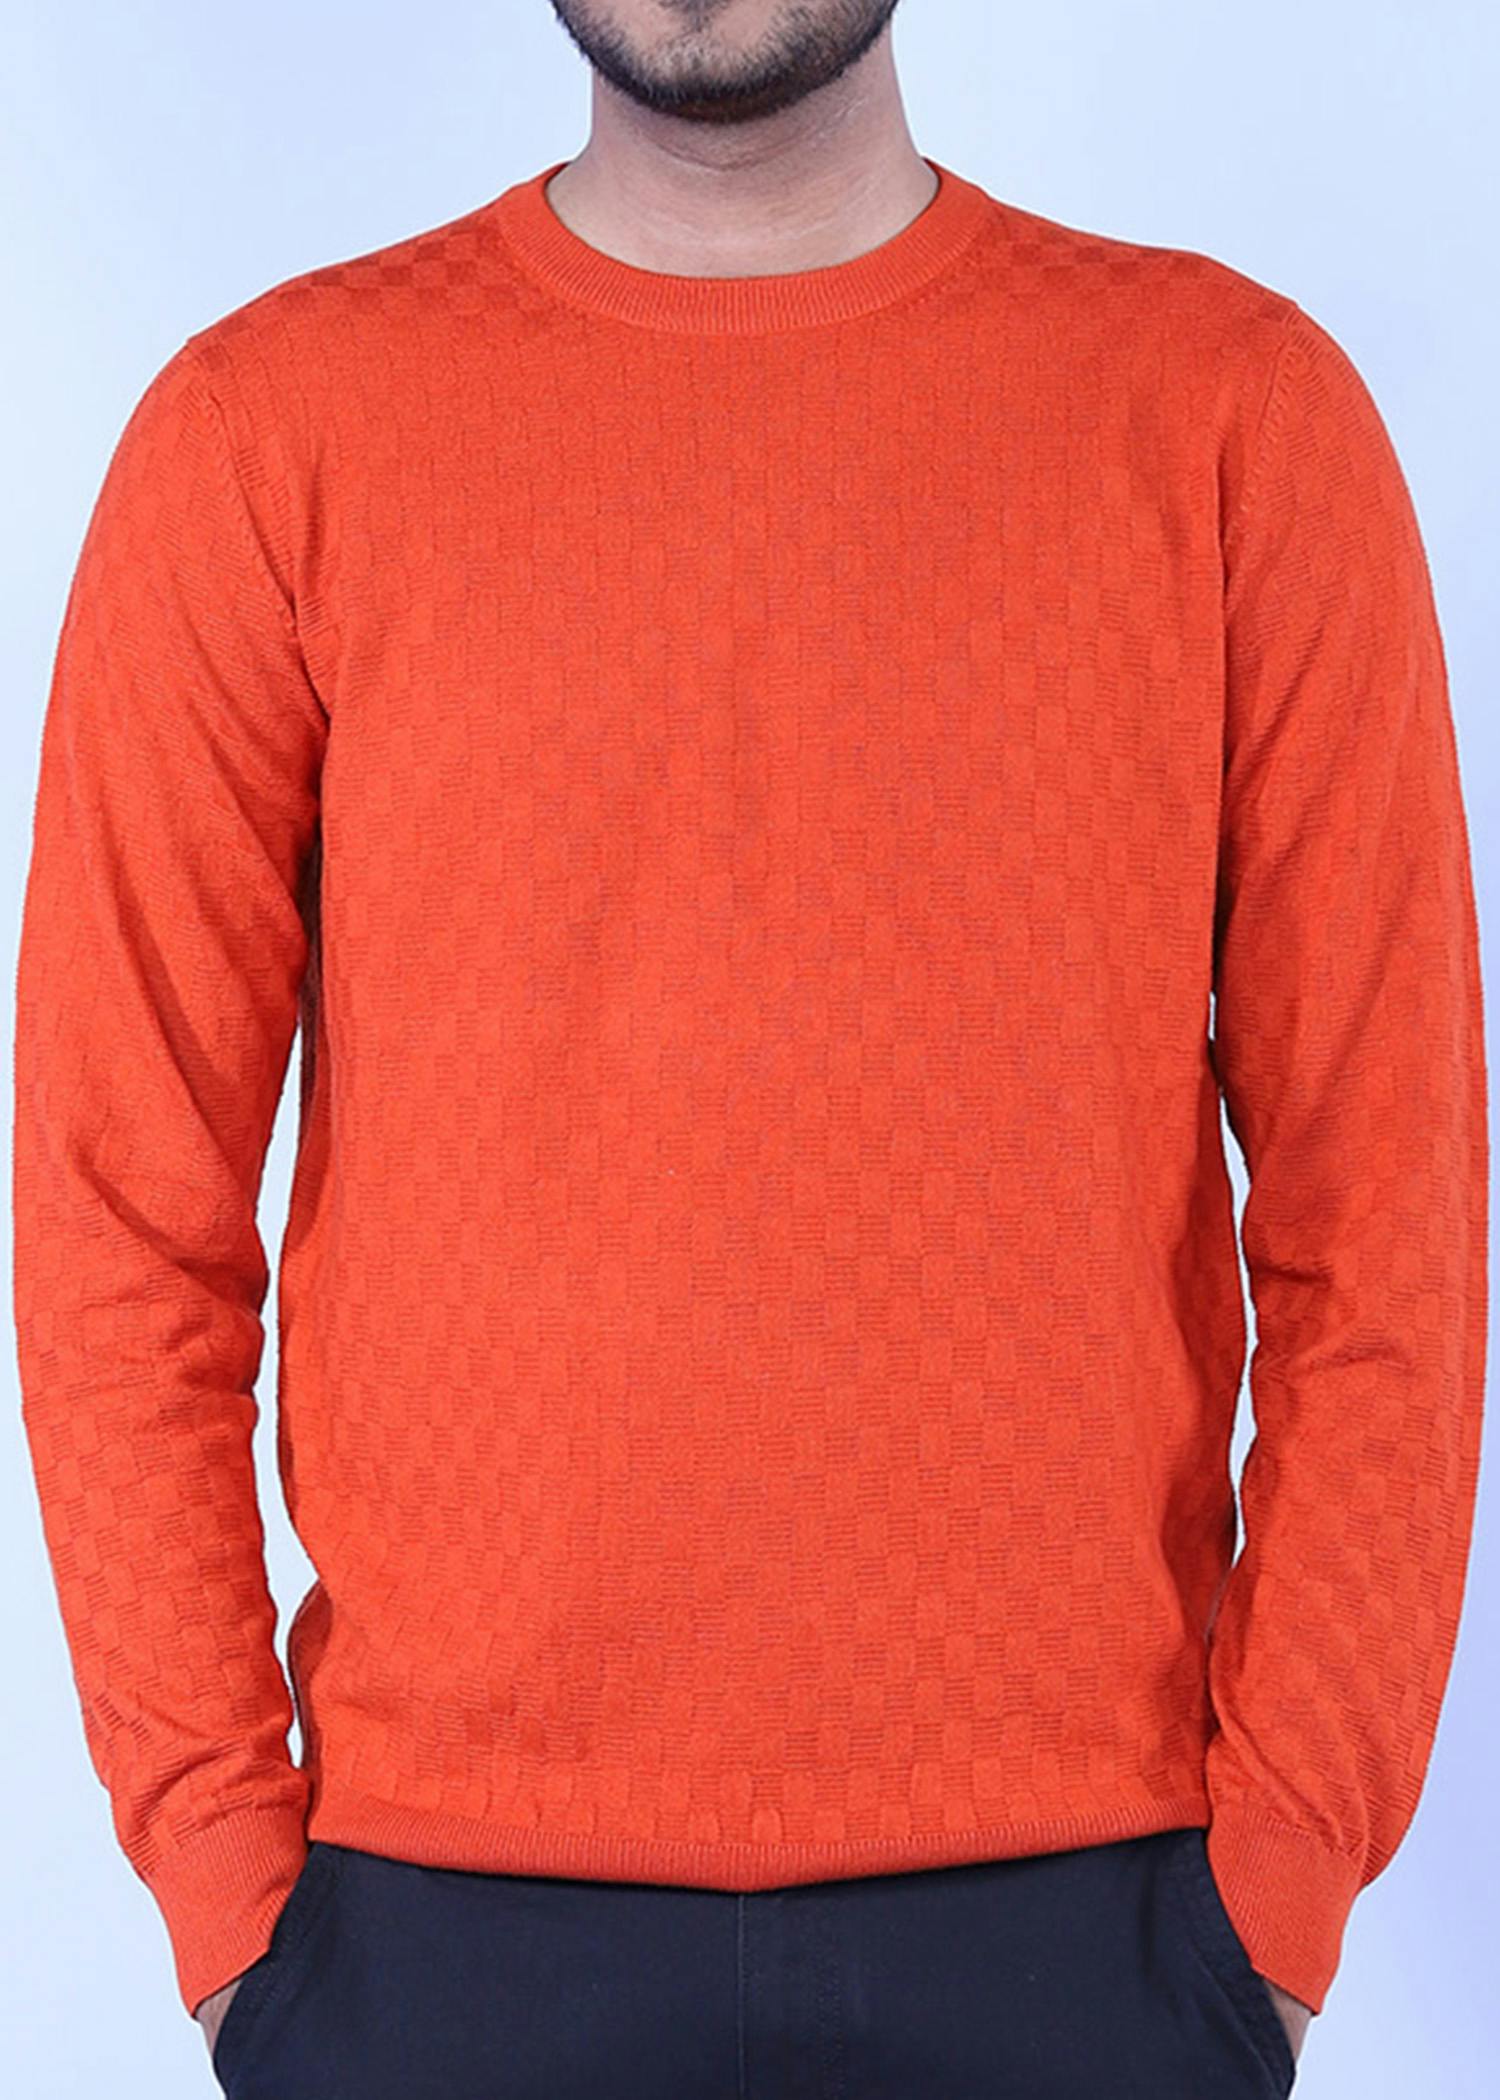 hillstar vii sweater orange color full head cropped